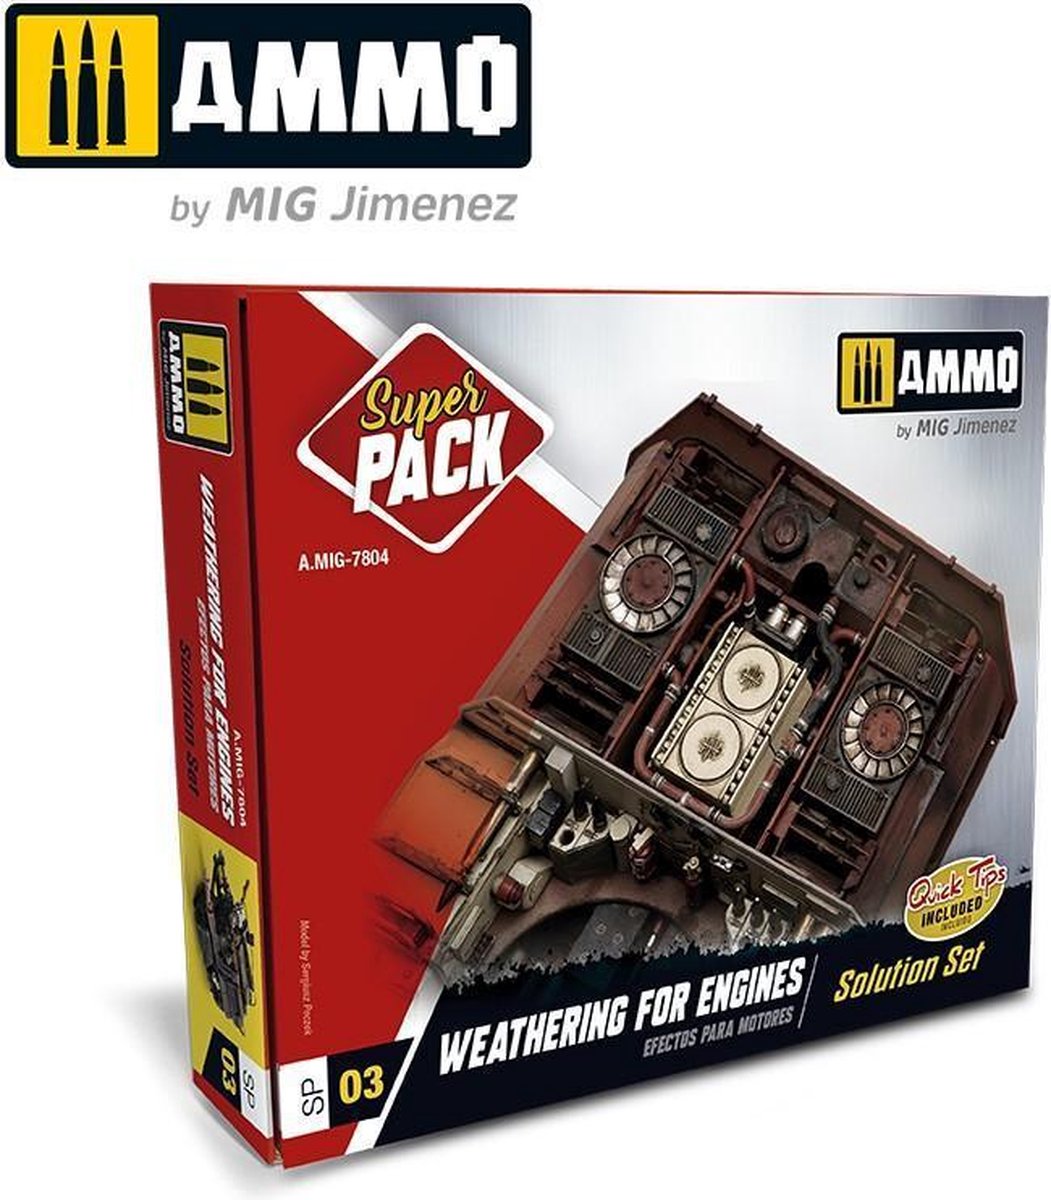 AMMO MIG 7804 Weathering for engines - Super Pack! Verf set